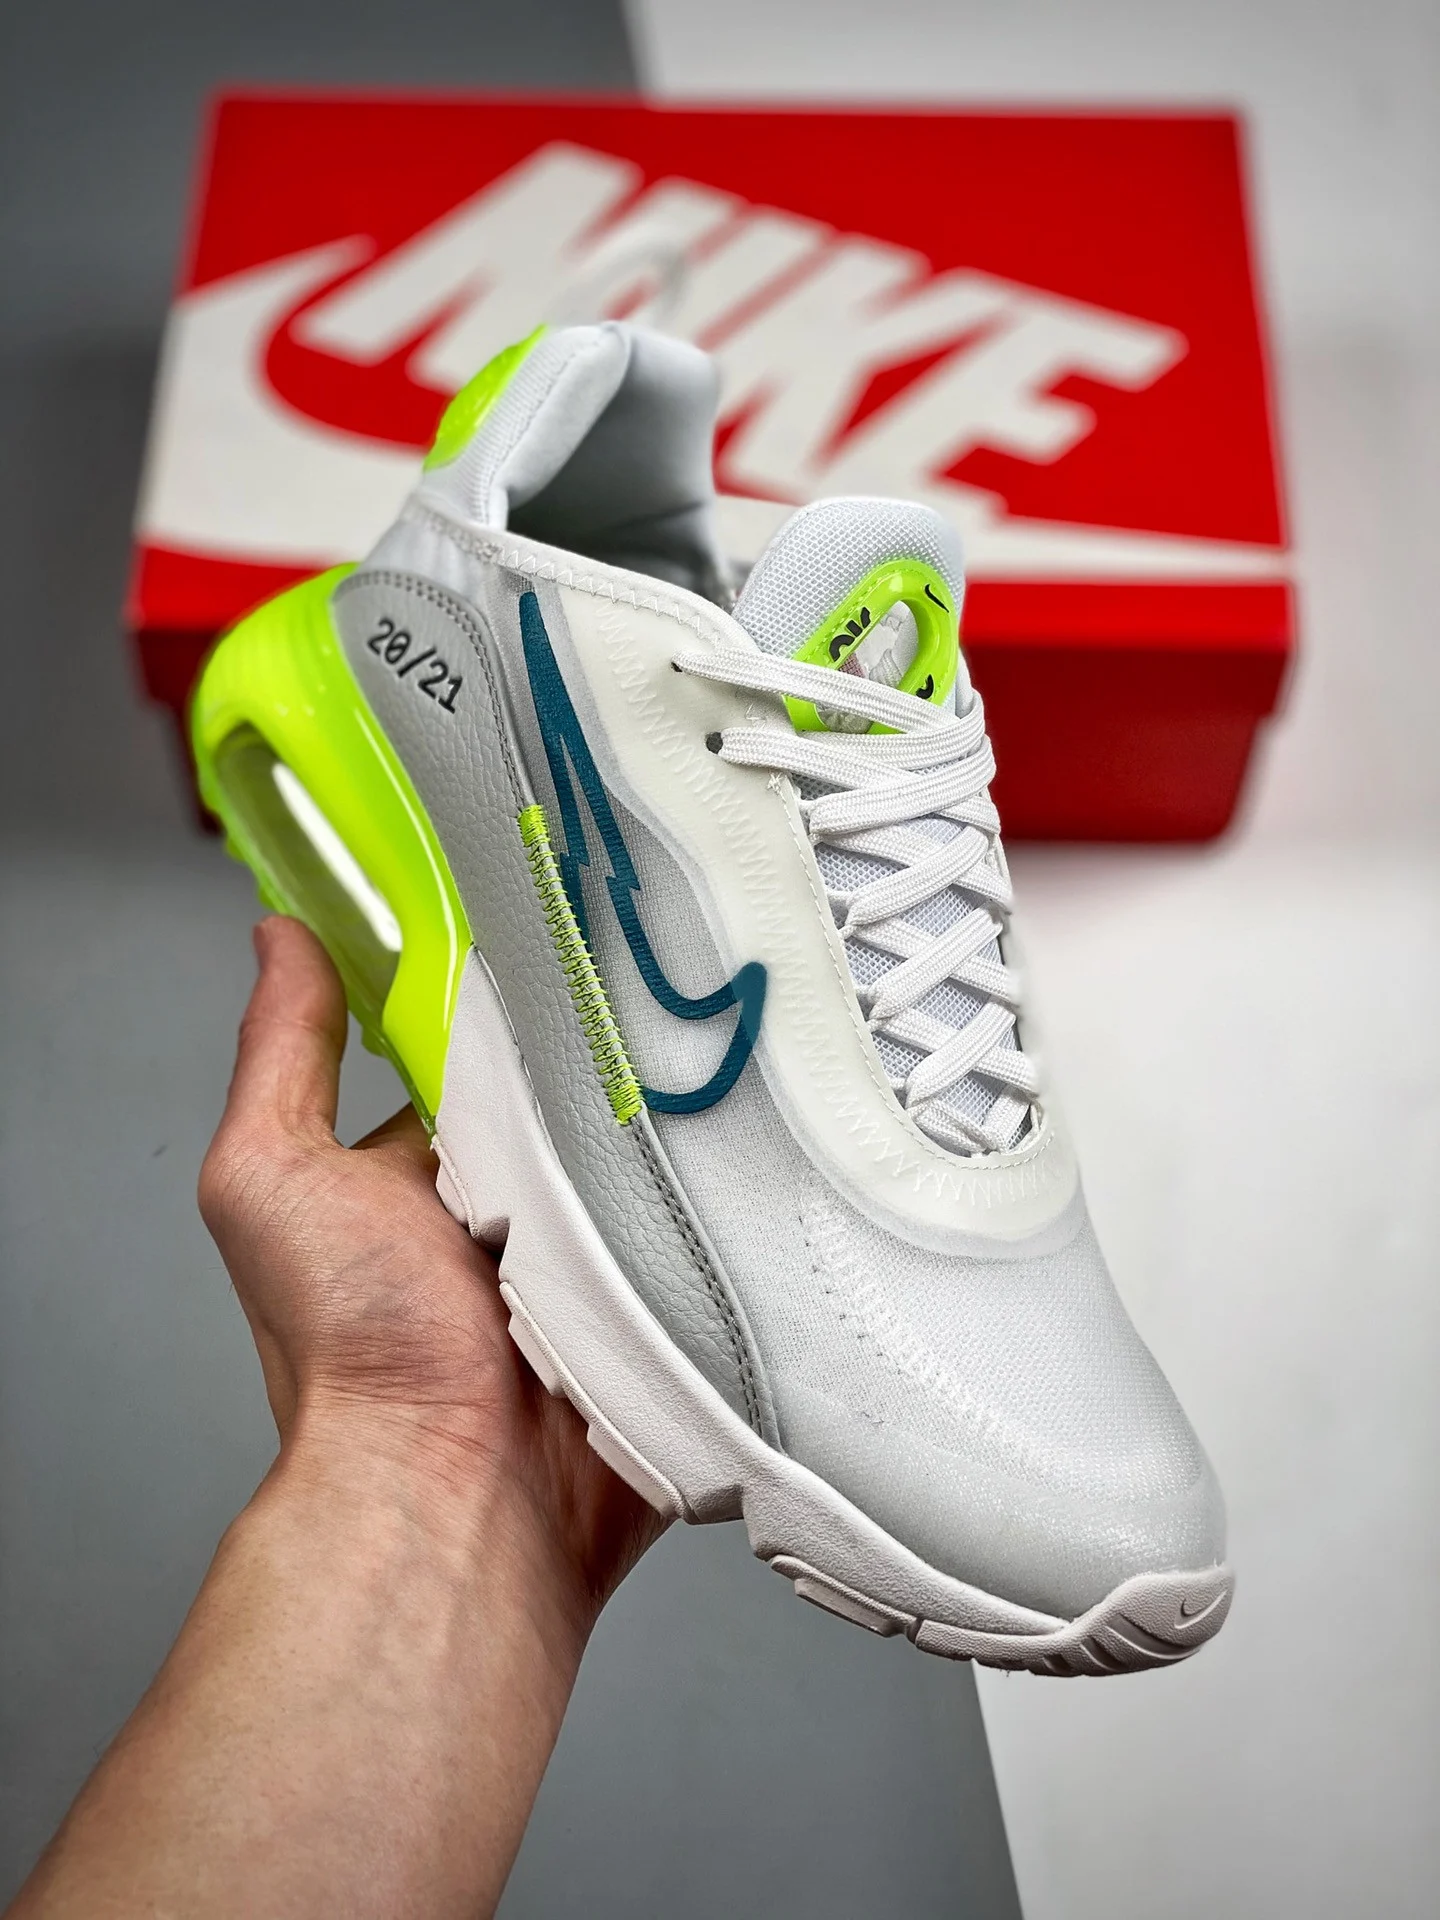 Nike Air Max 2090 White Volt On Sale